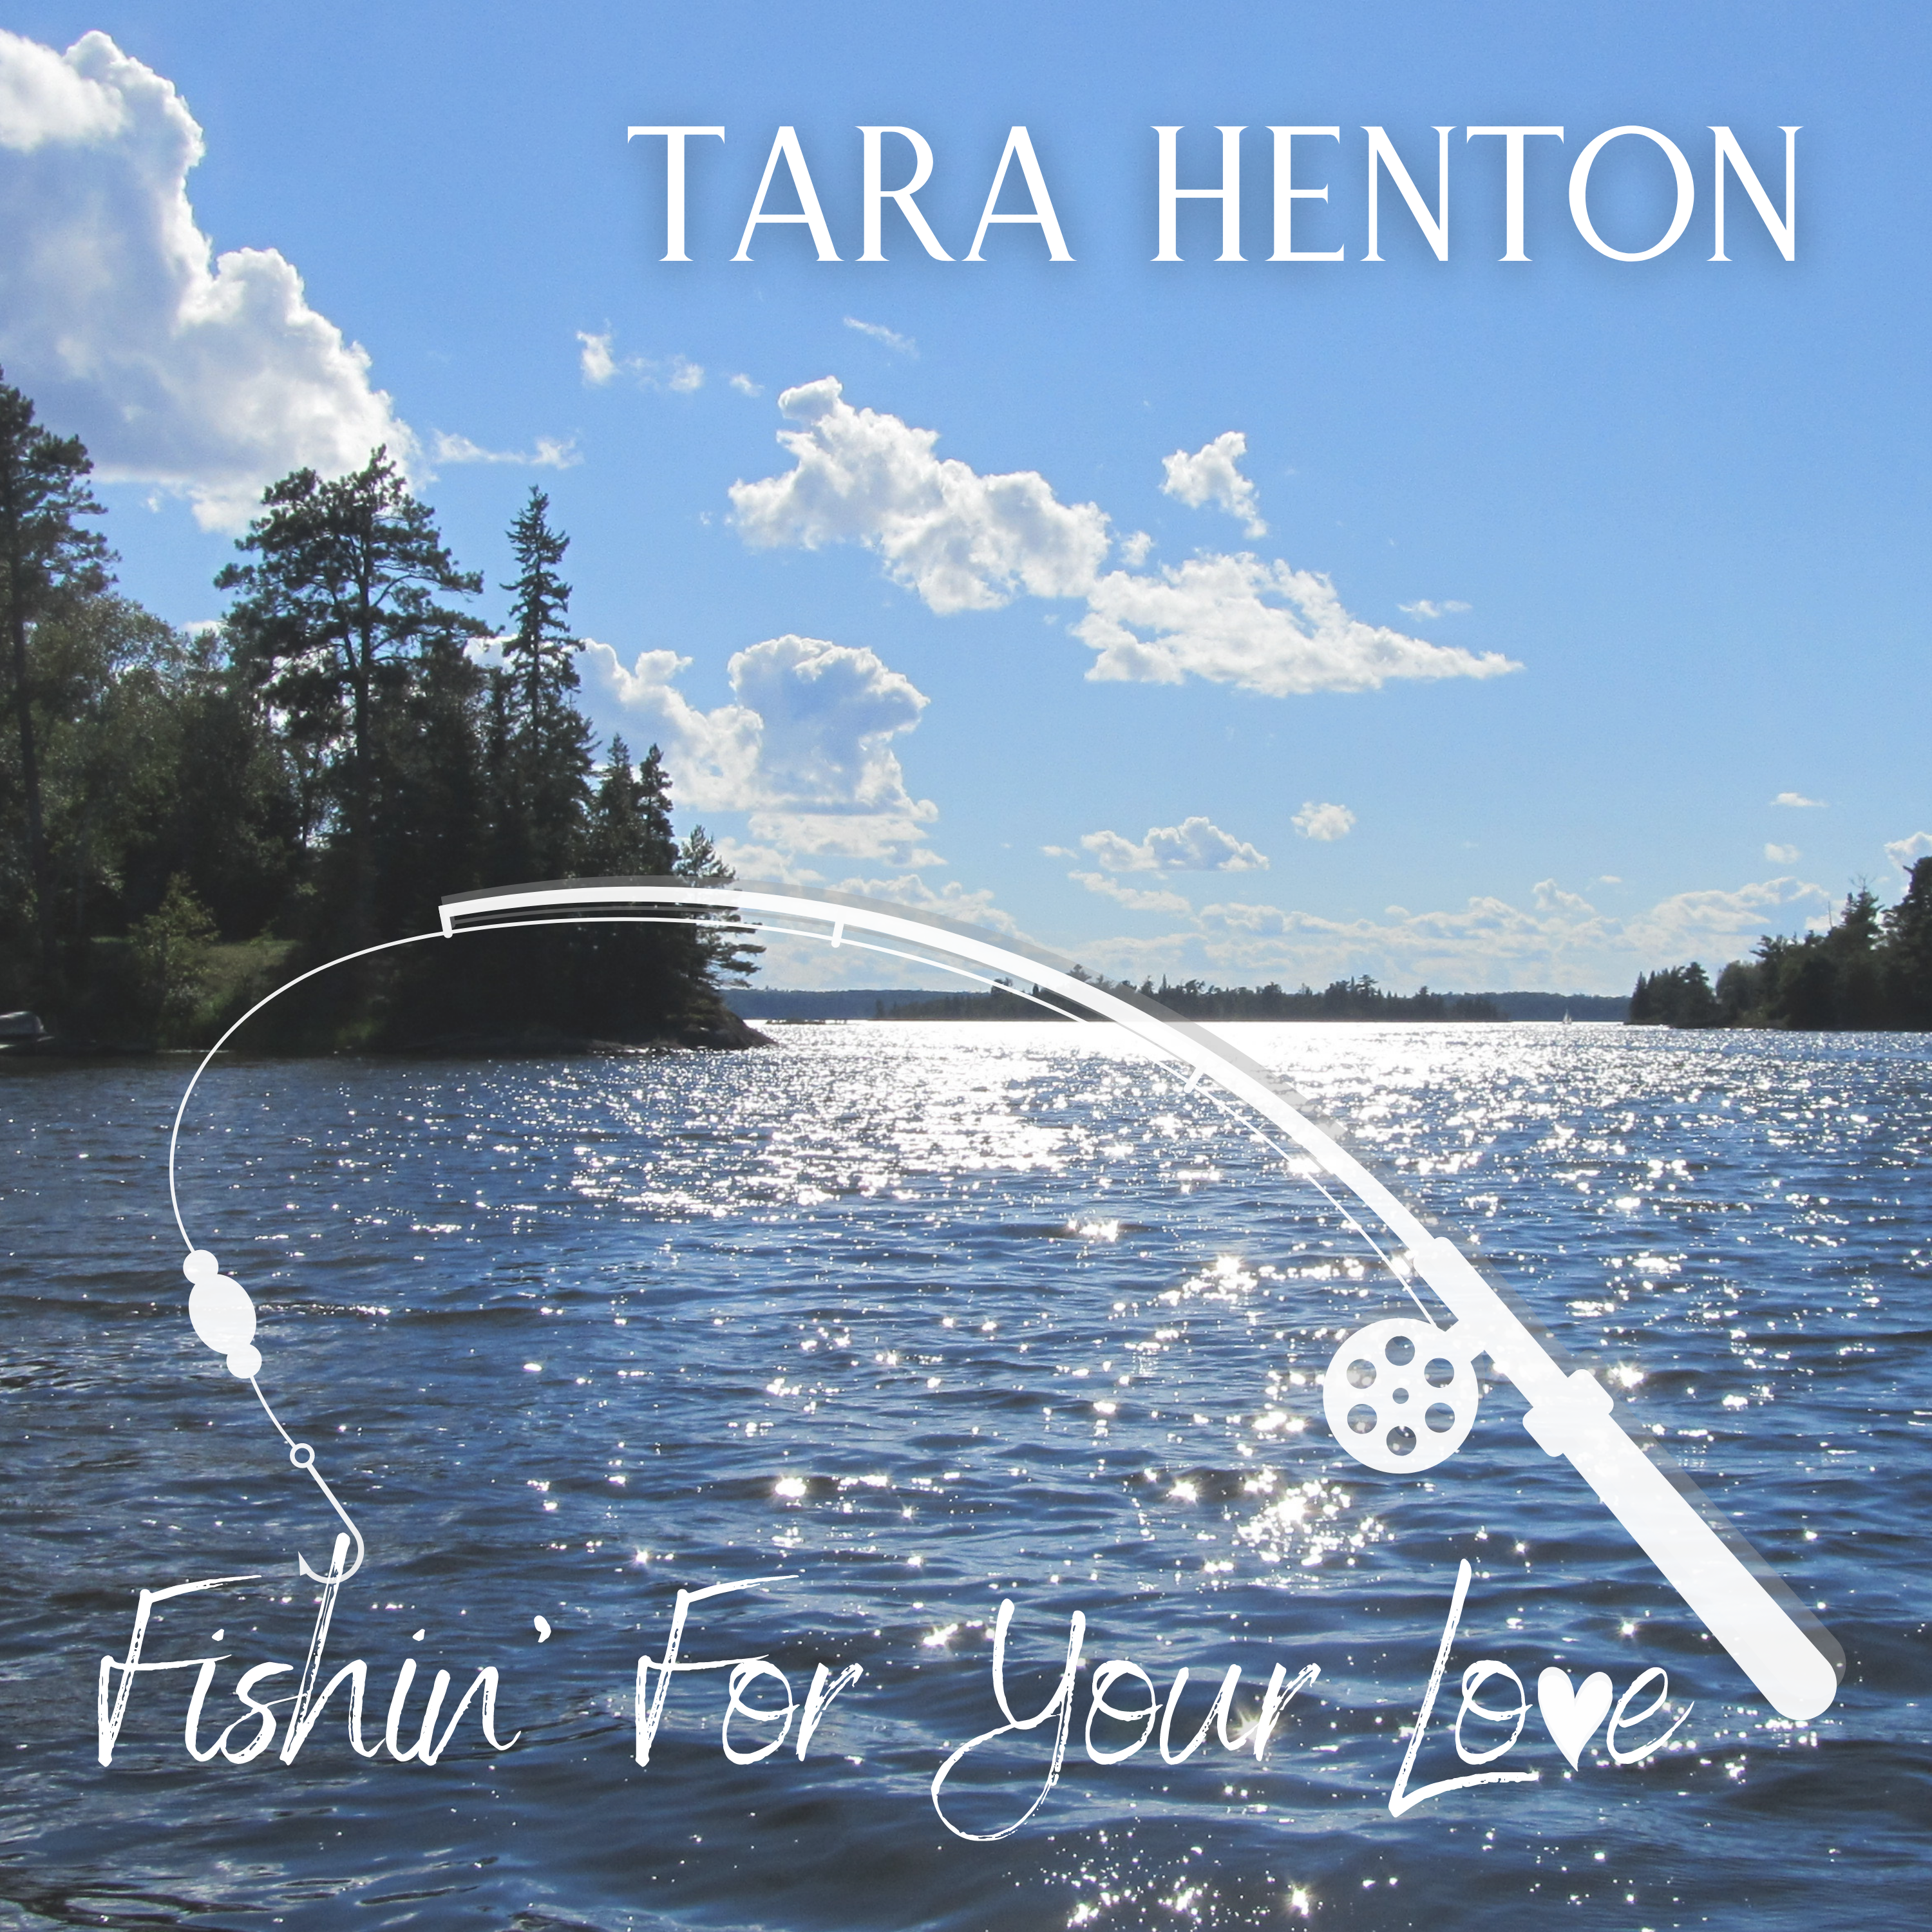 Art for Fishin' For Your Love by Tara Henton